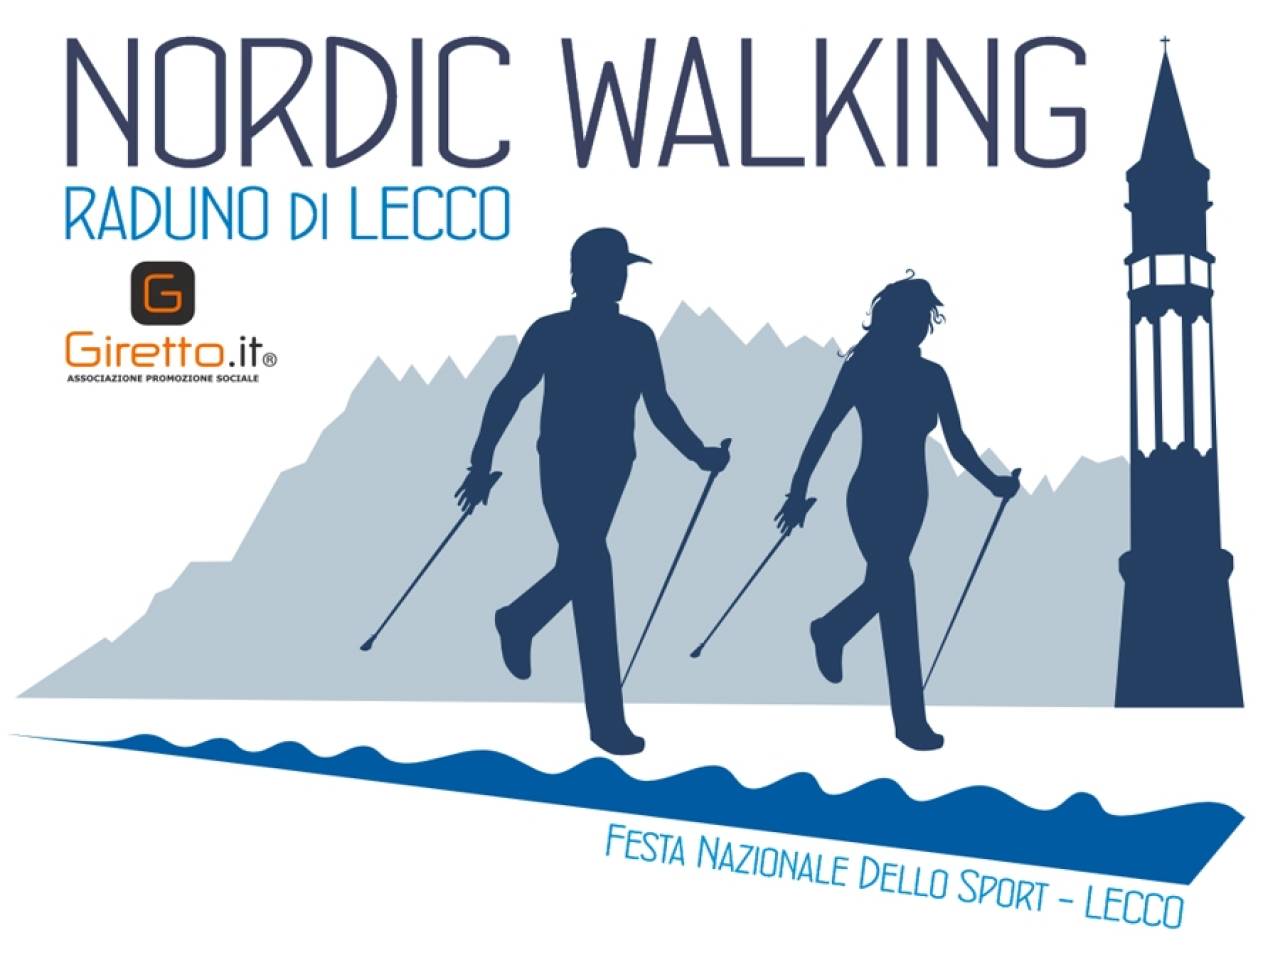 Nordic Walking: raduno di Lecco - 2013